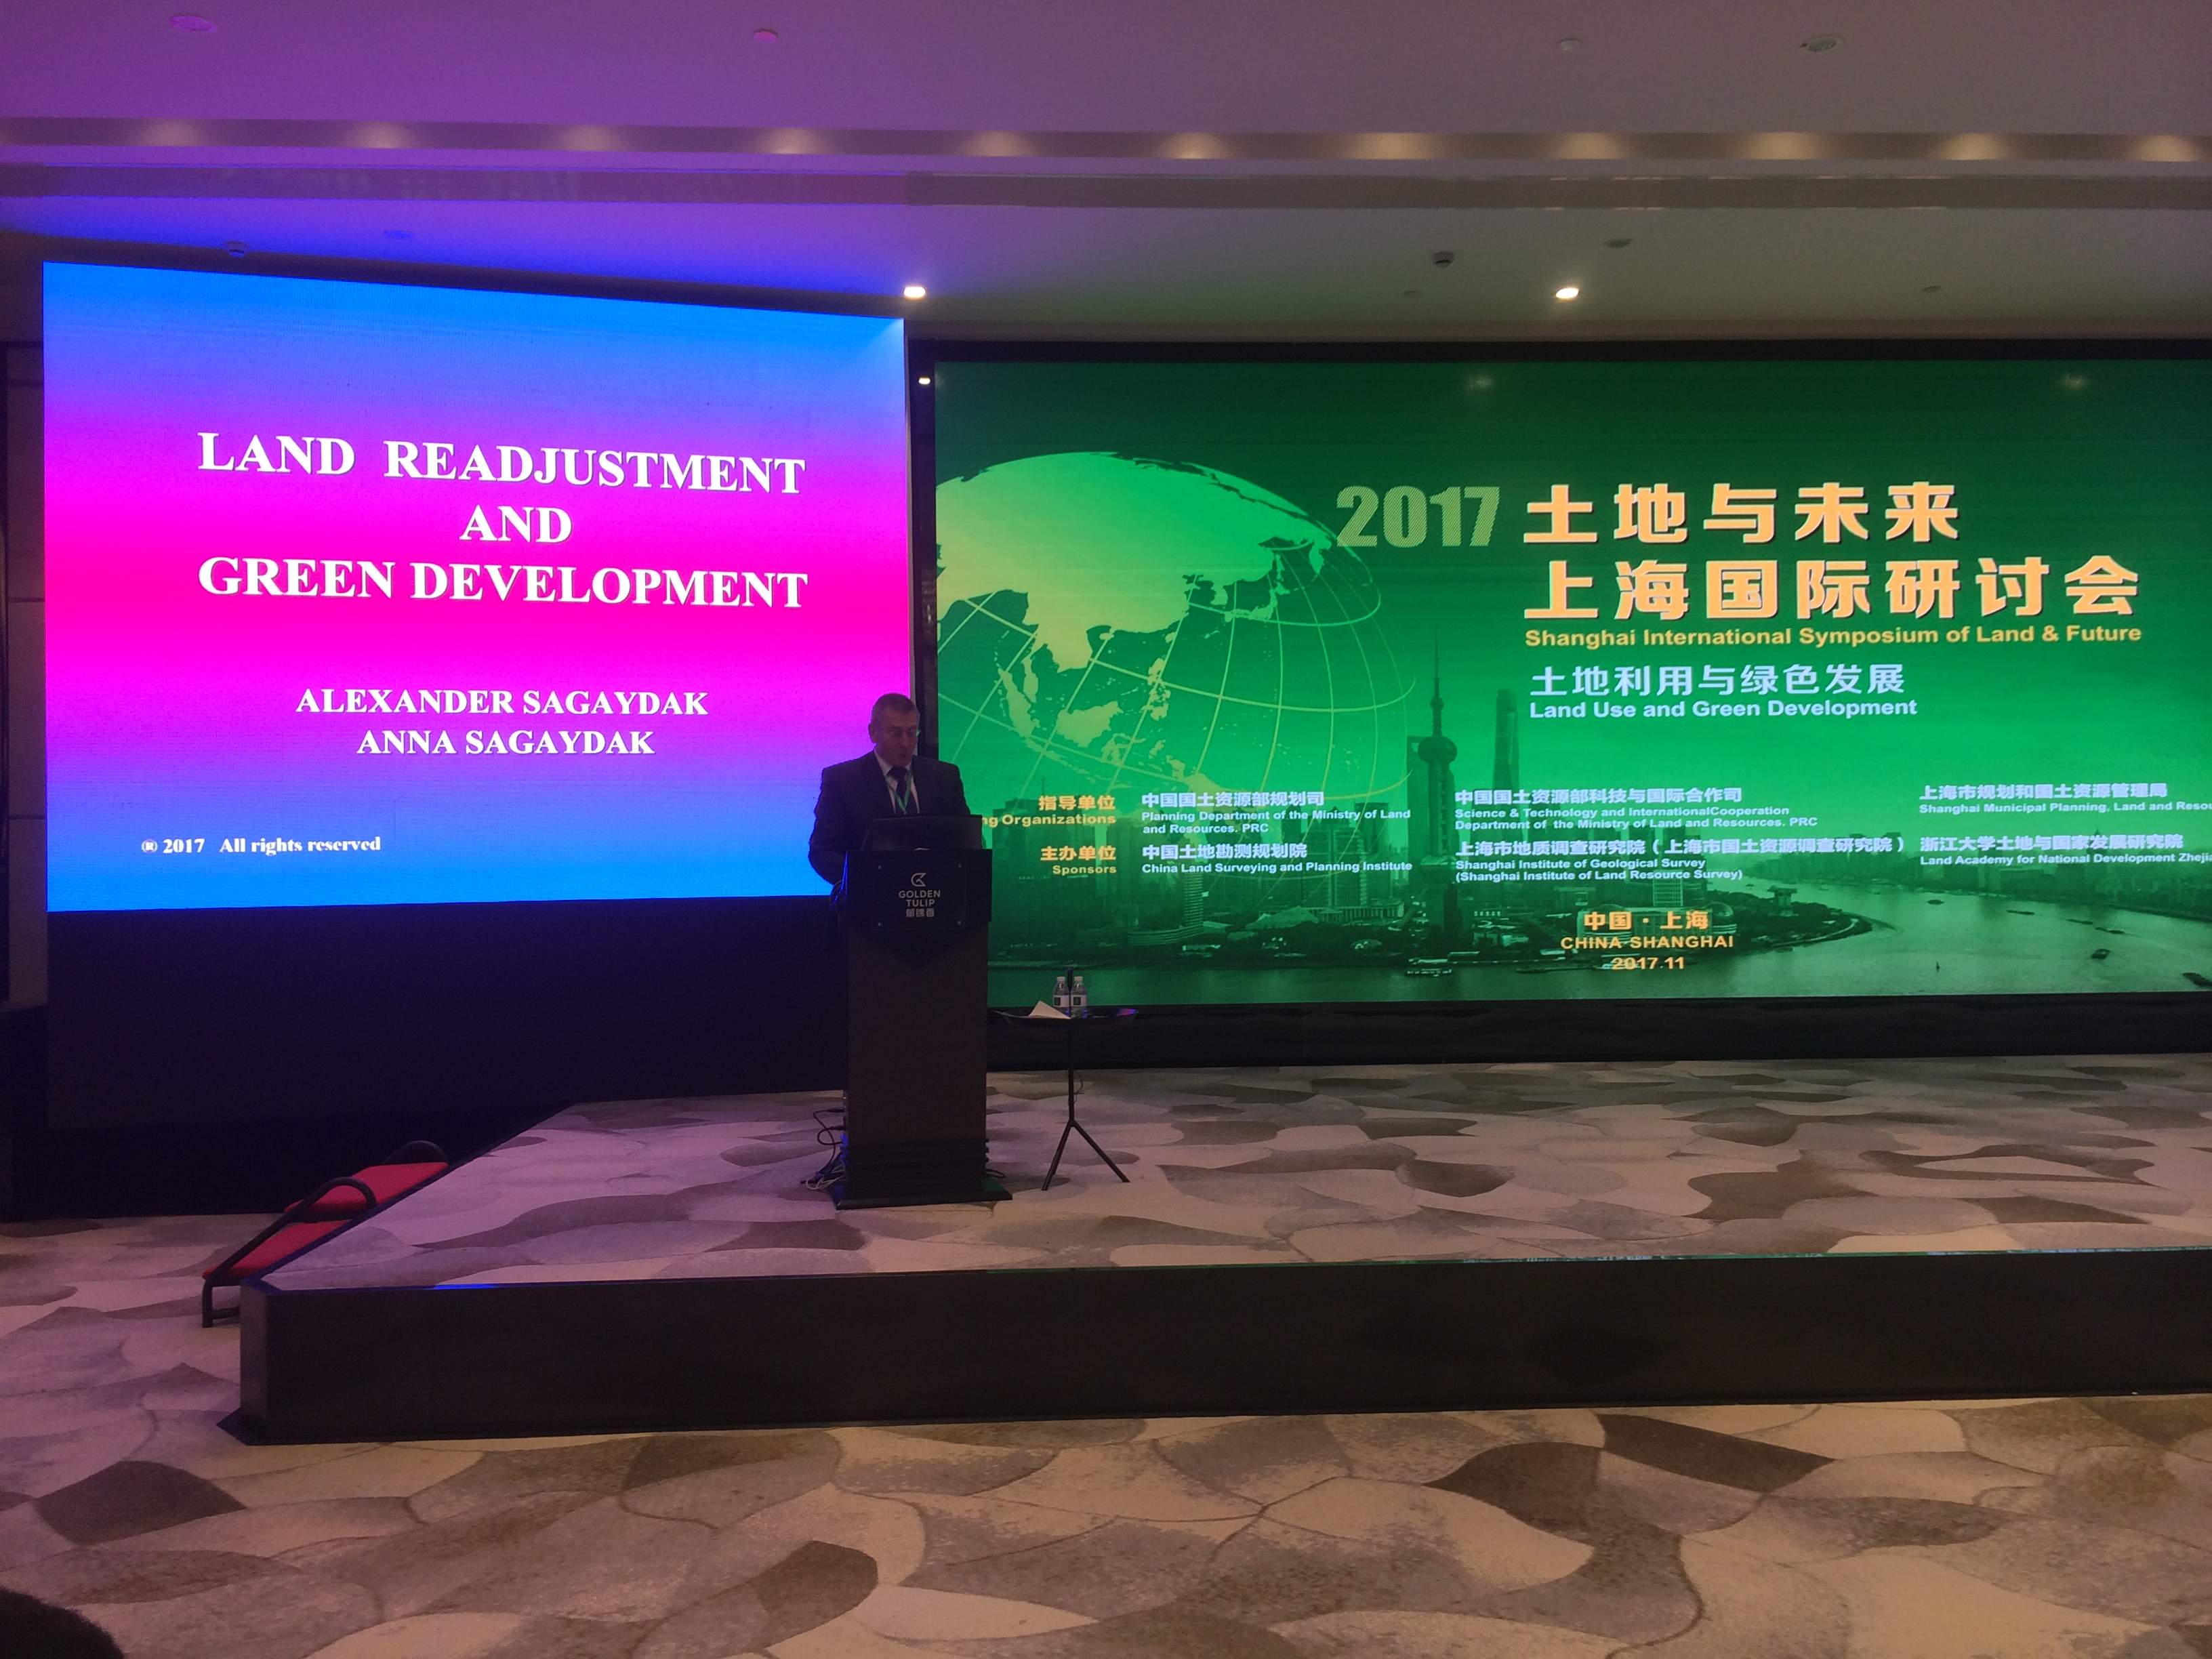 Professor Alexander Sagaydak makes presentation "Land Readjustment and Green Development" at 2017 Shanghai Land and Futurte Conference, China